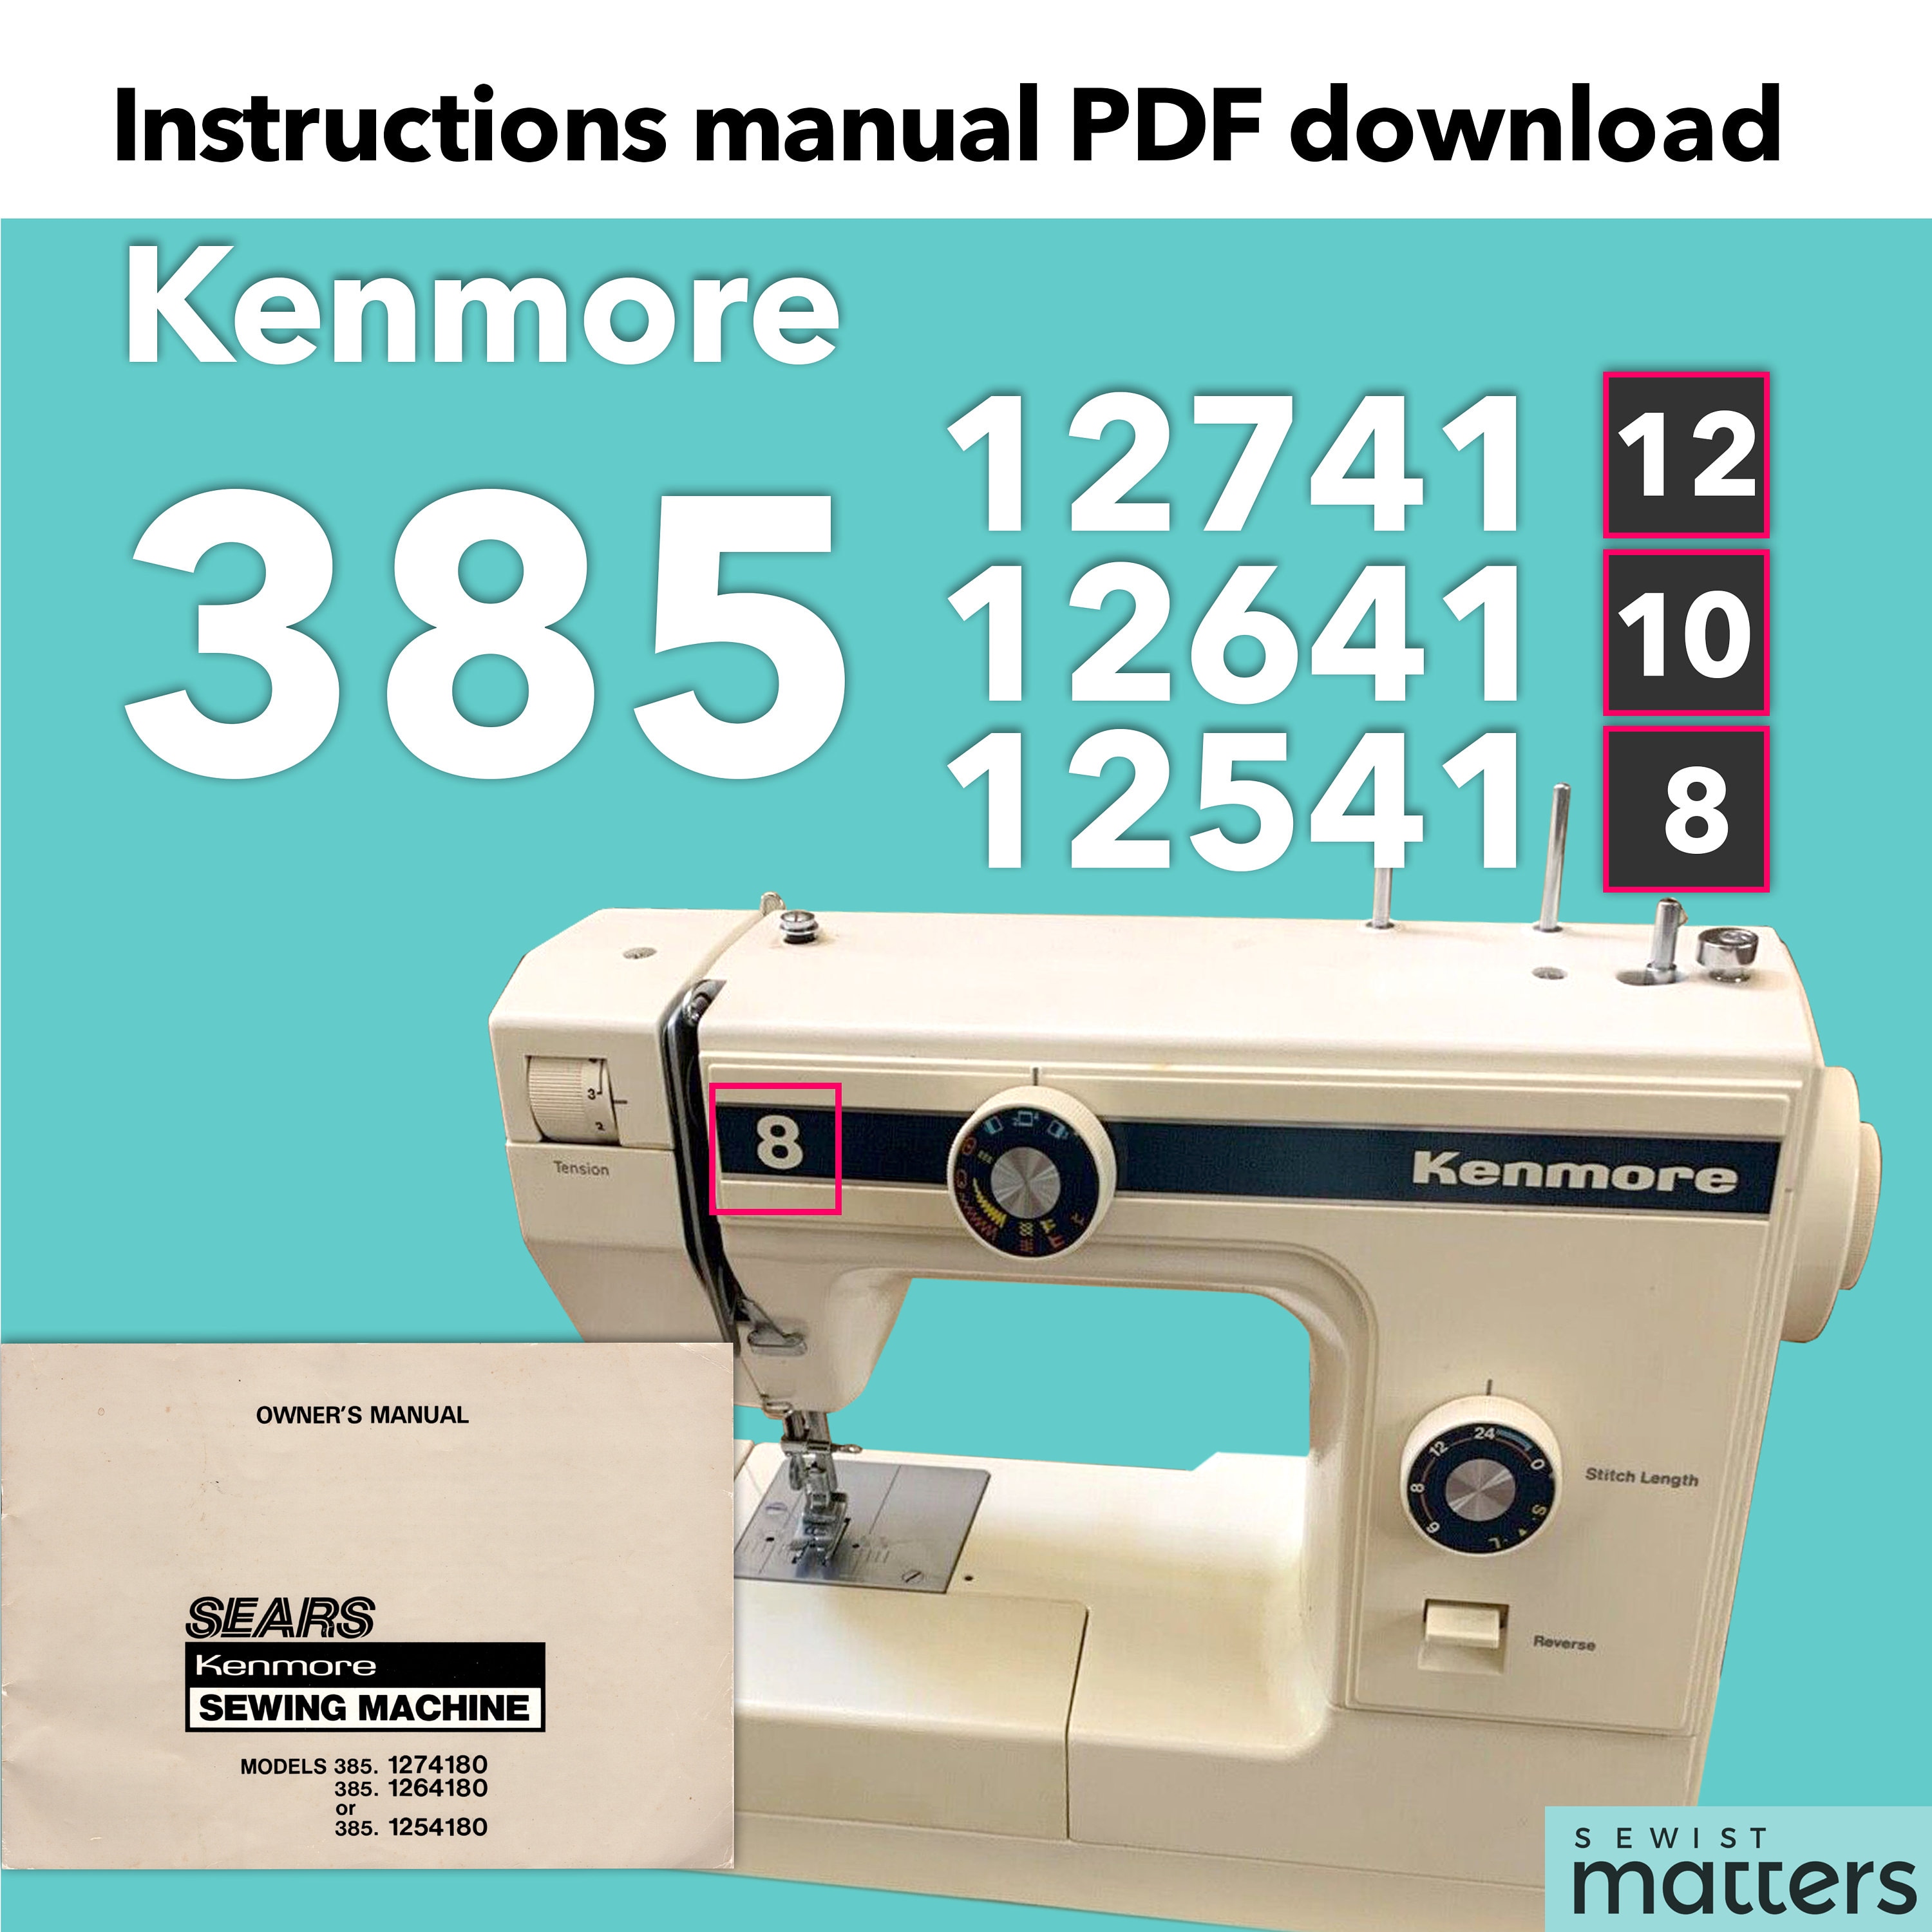 Kenmore 12, 12741, 385.1274180, 10, 12641, 1264180, 8, 12541, 1254180 Sewing  Machine Instruction Manual PDF Download 